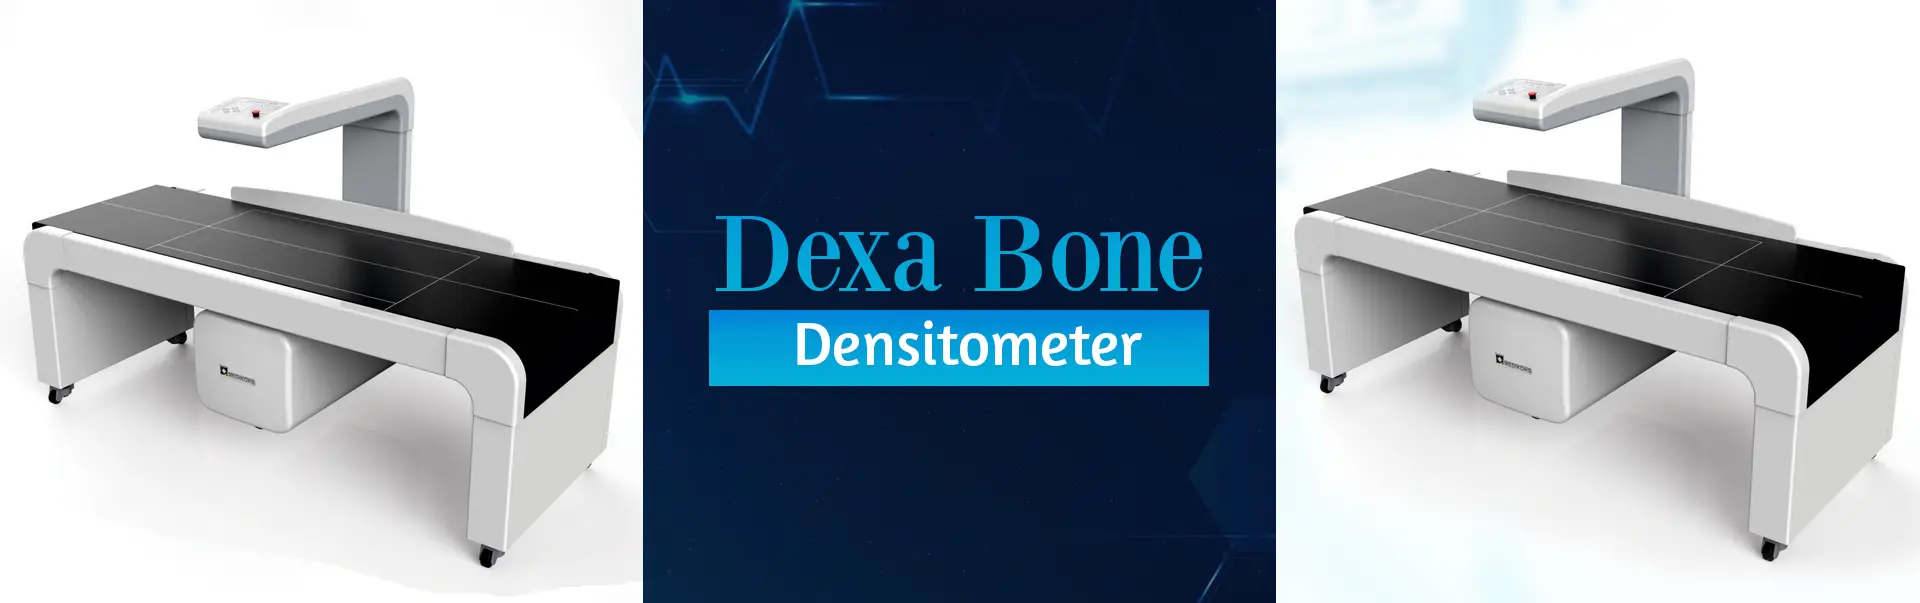 Dexa Bone Densitometer Manufacturers in Rajkot